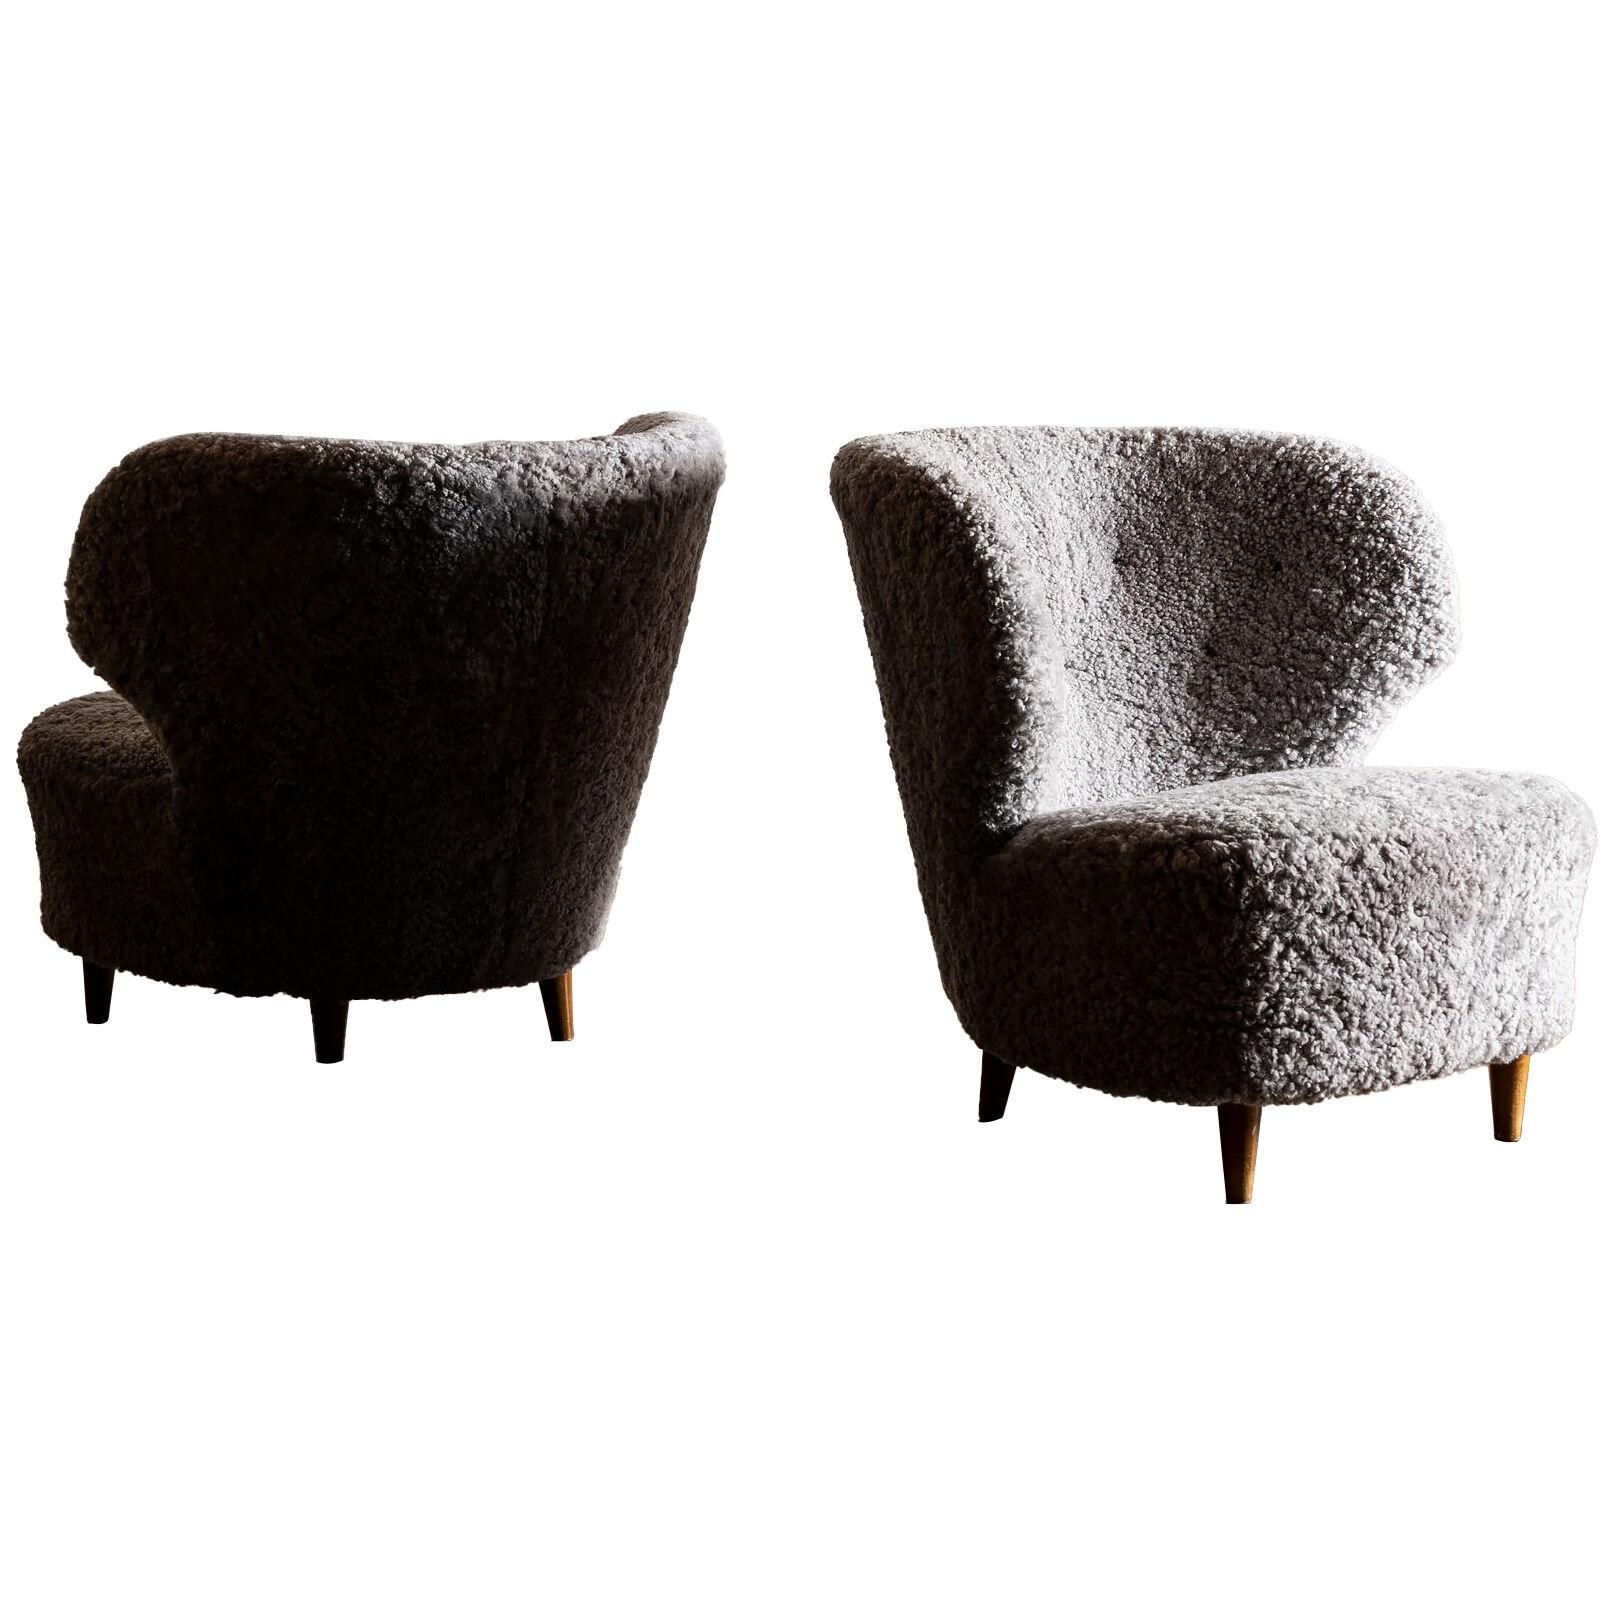 Rare Pair of Lounge Chairs by Carl-Johan Bowman in Grey Sheepskin, Finland, 1940